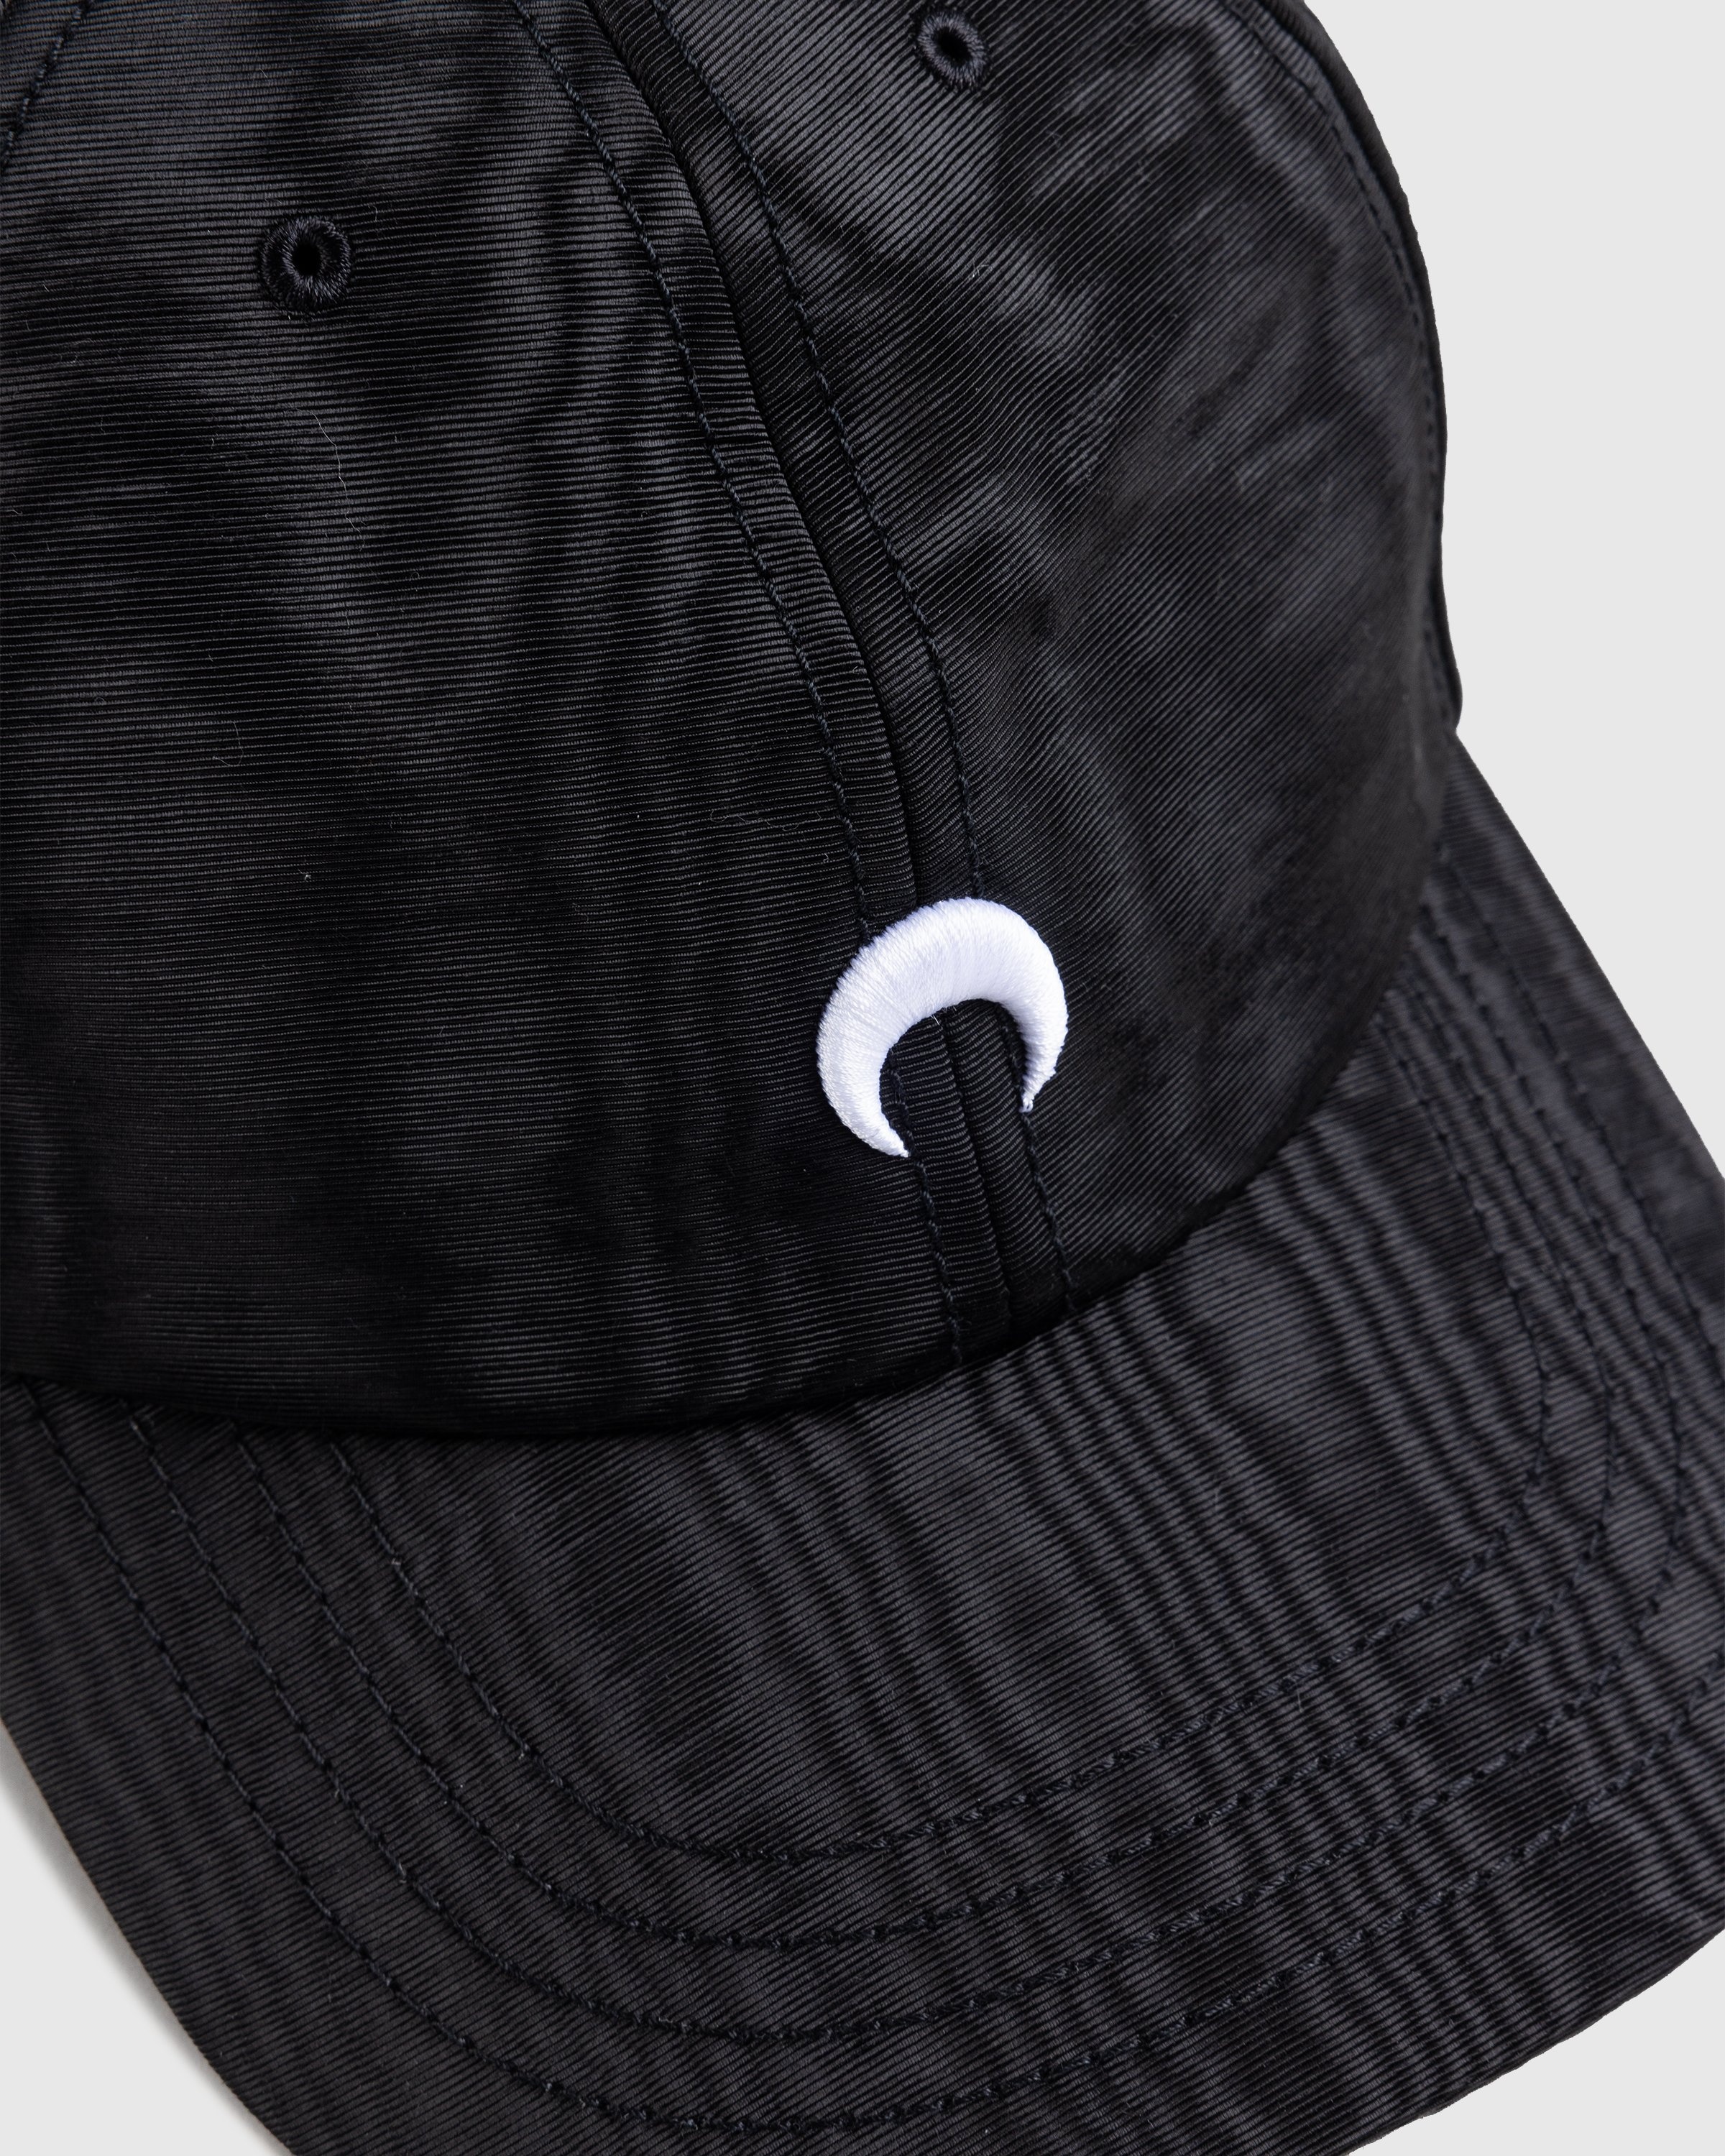 Marine Serre – Embroidered Regenerated Moire Cap Black - Hats - Black - Image 6